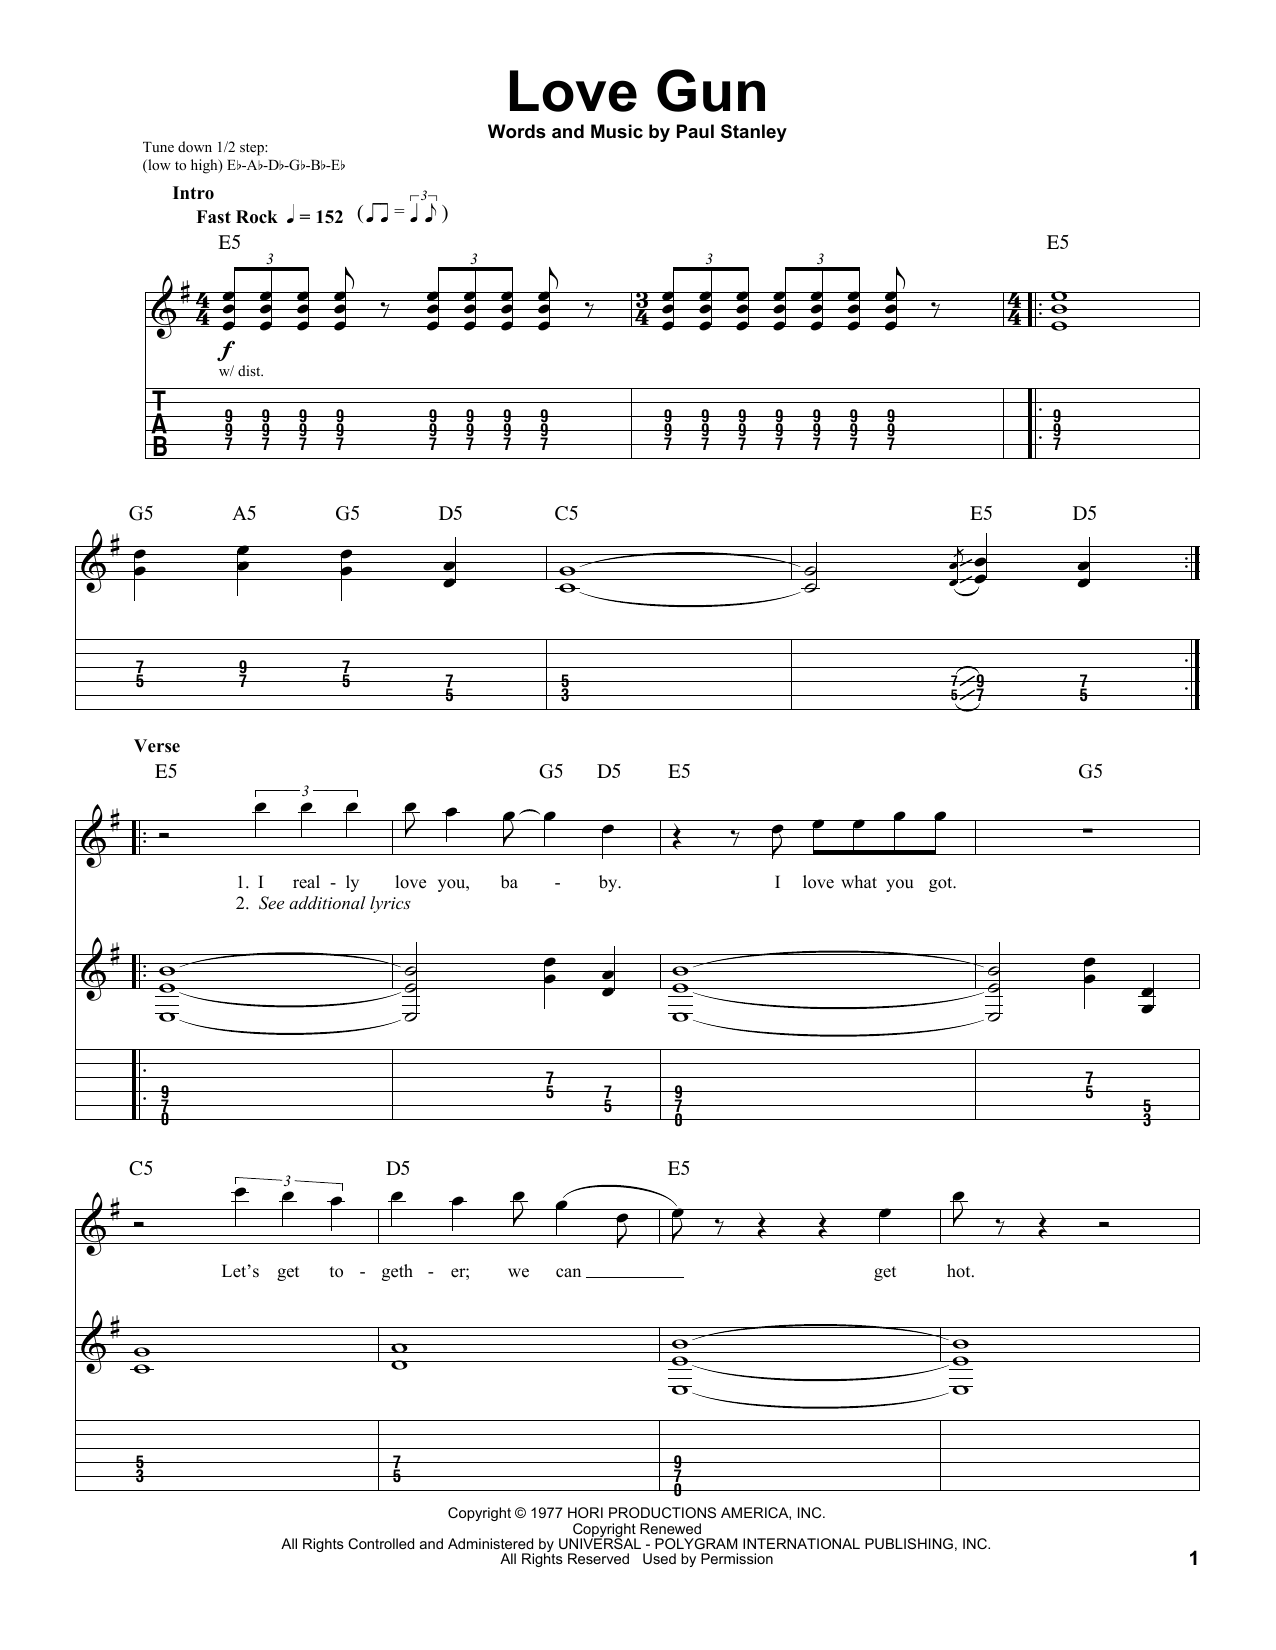 KISS Love Gun Sheet Music Notes & Chords for Drums Transcription - Download or Print PDF